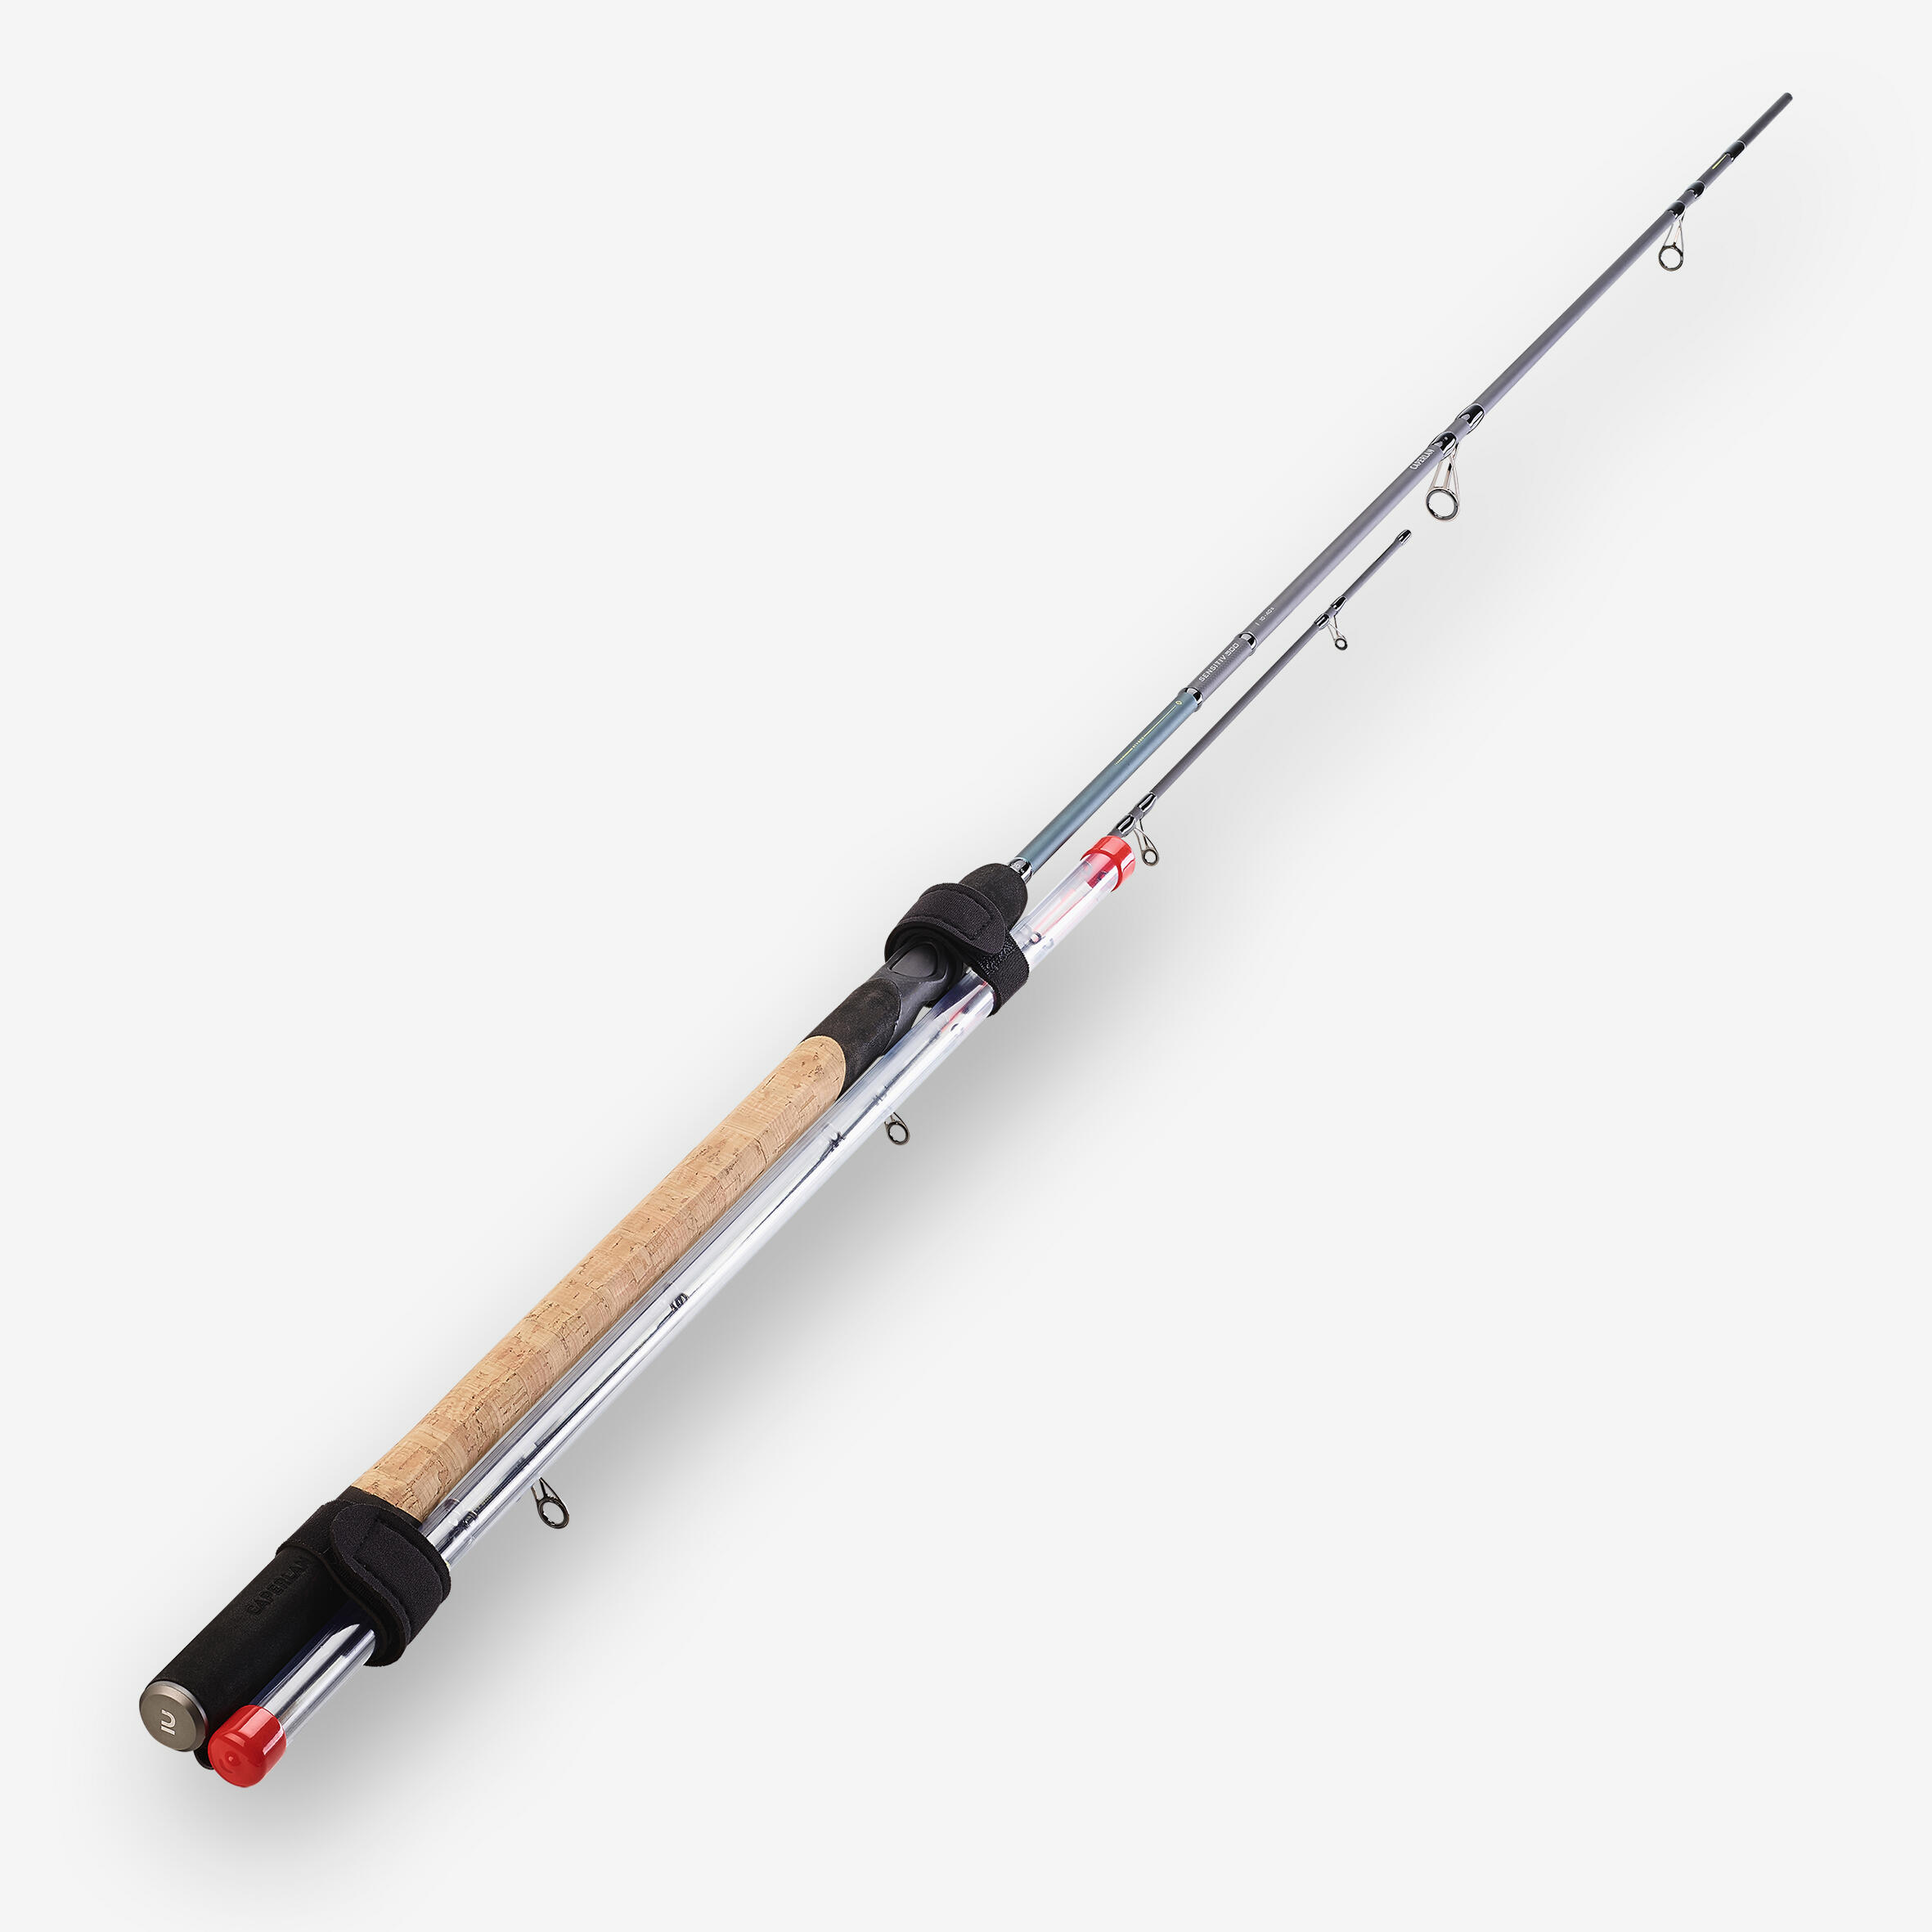 Feeder fishing rod 3m00 - Sensitiv 500 3m00 10/40 g 11/11